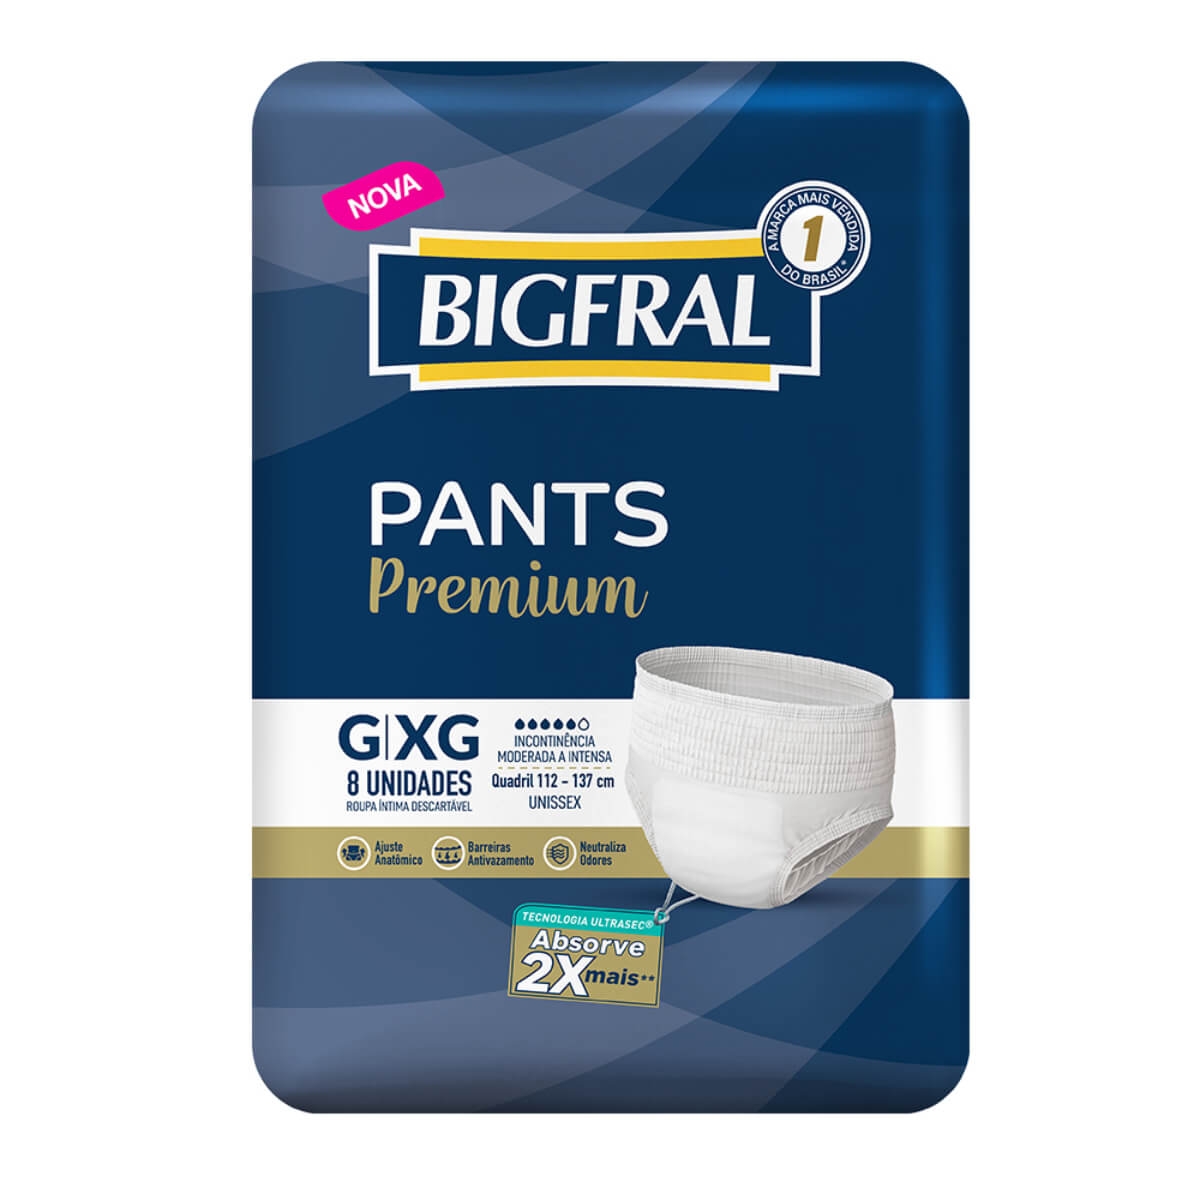 Roupa Íntima Bigfral Pants Premium Tamanho G/XG 8 Unidades